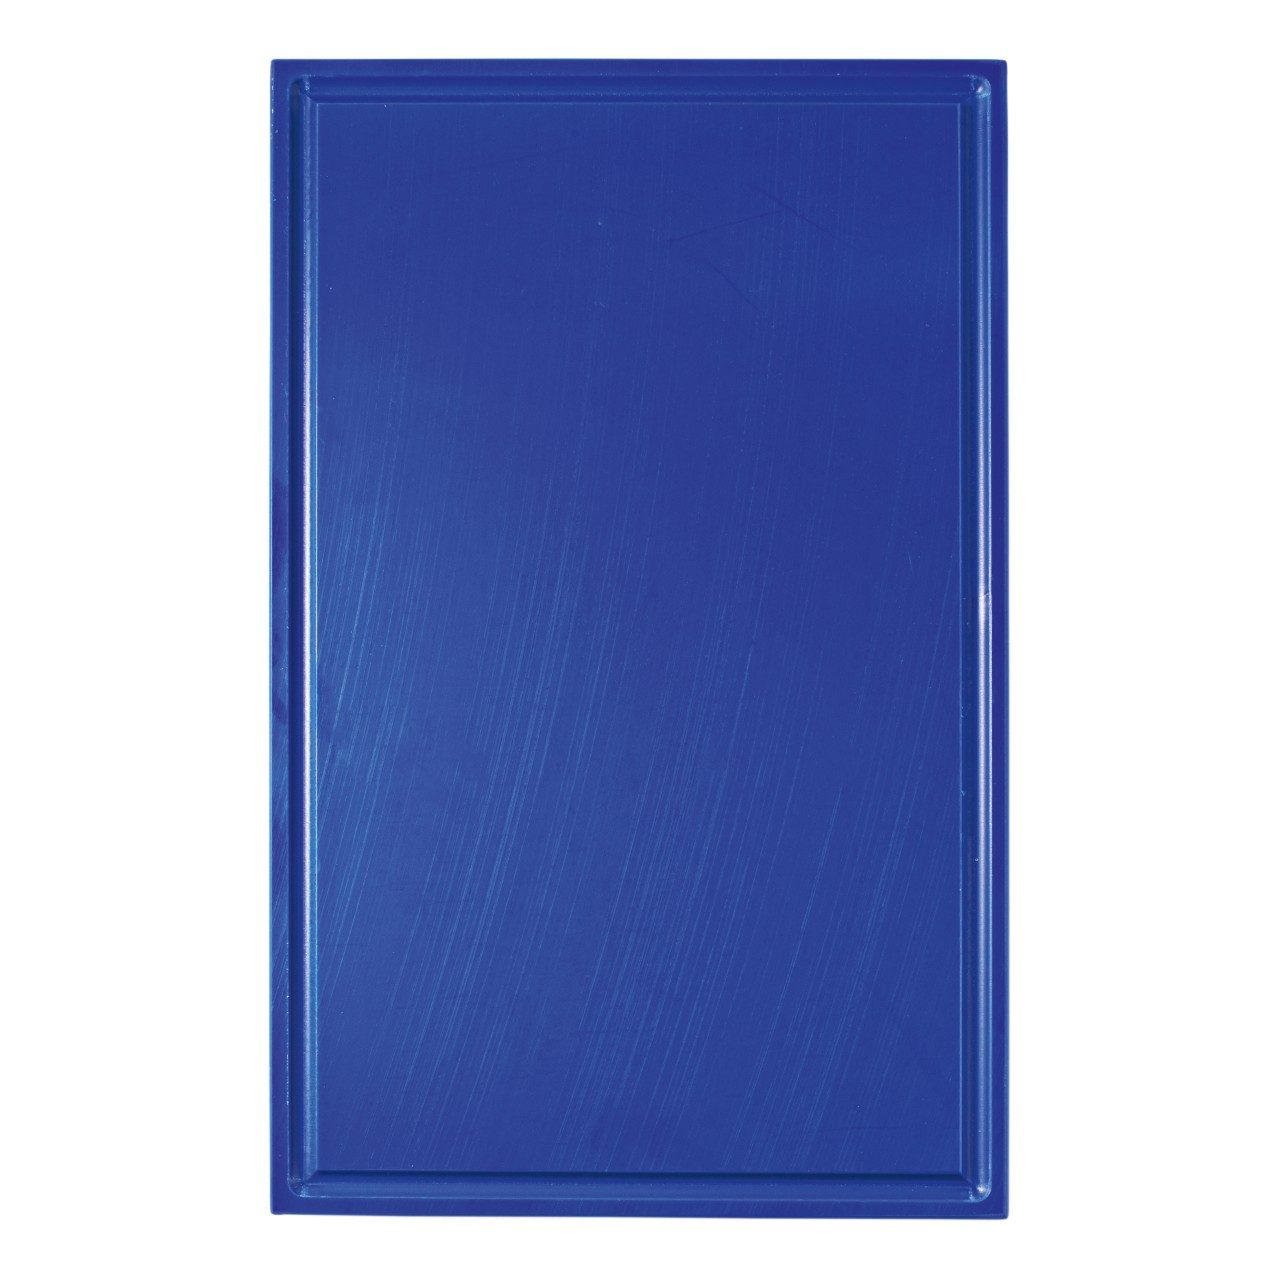 trui Mijlpaal Ik wil niet ProChef Snijplank met sapgeul blauw, 530 x 325 x 15 mm Per stuk | Sligro.nl